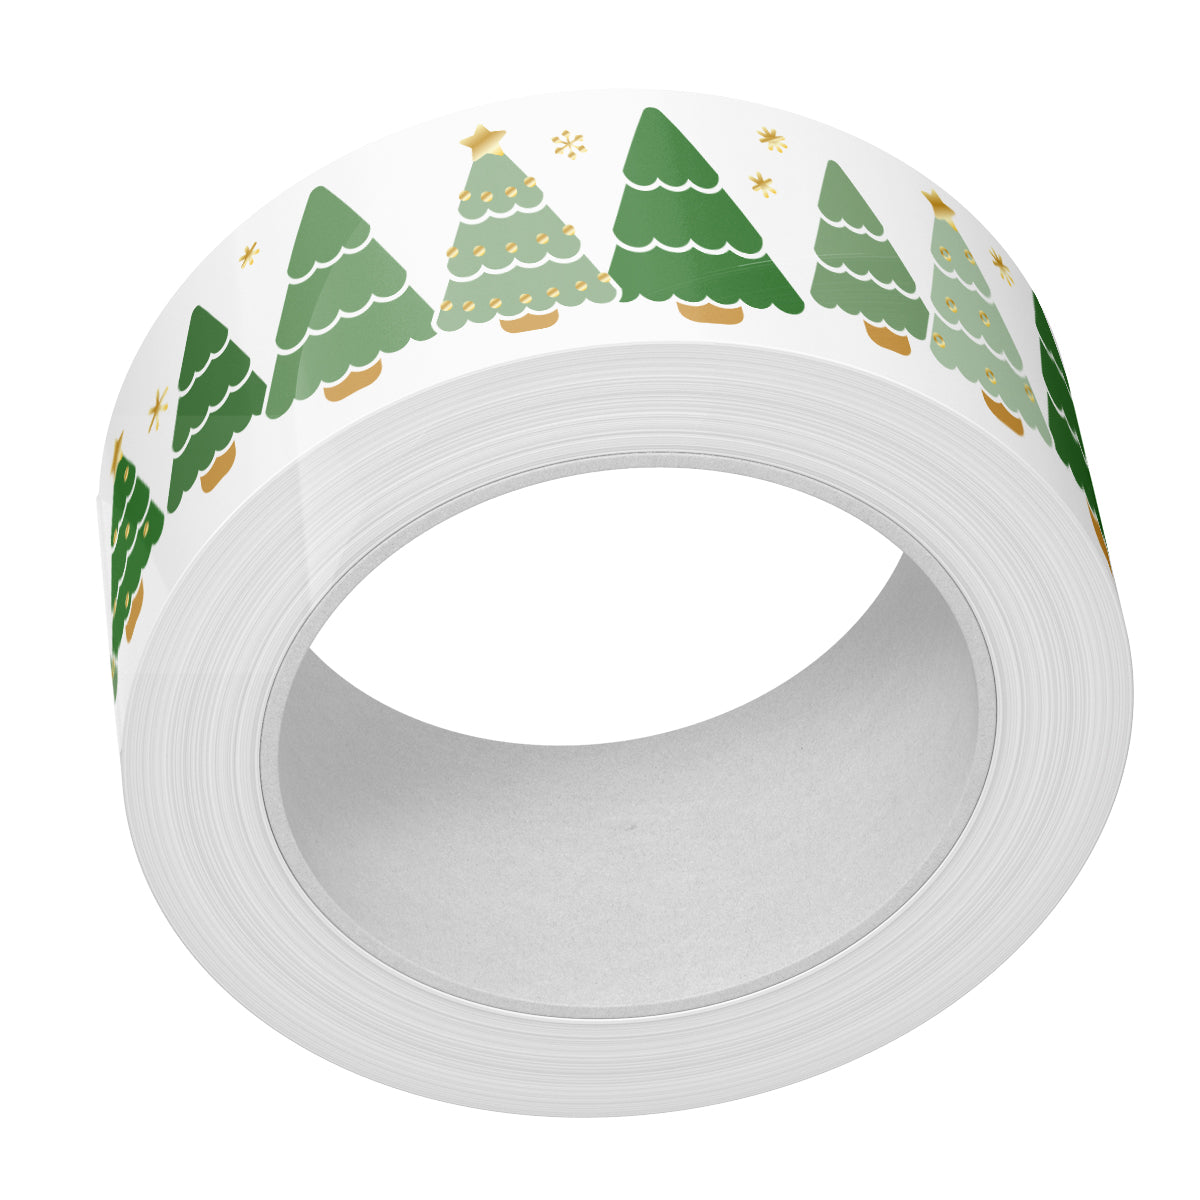 DAPUTOU Christmas Washi Tape 16Rolls Gold Foil Winter Holiday Washi Tape  Set Deer Snowflake Christmas Tree Decorative Tape for Christmas Journal DIY